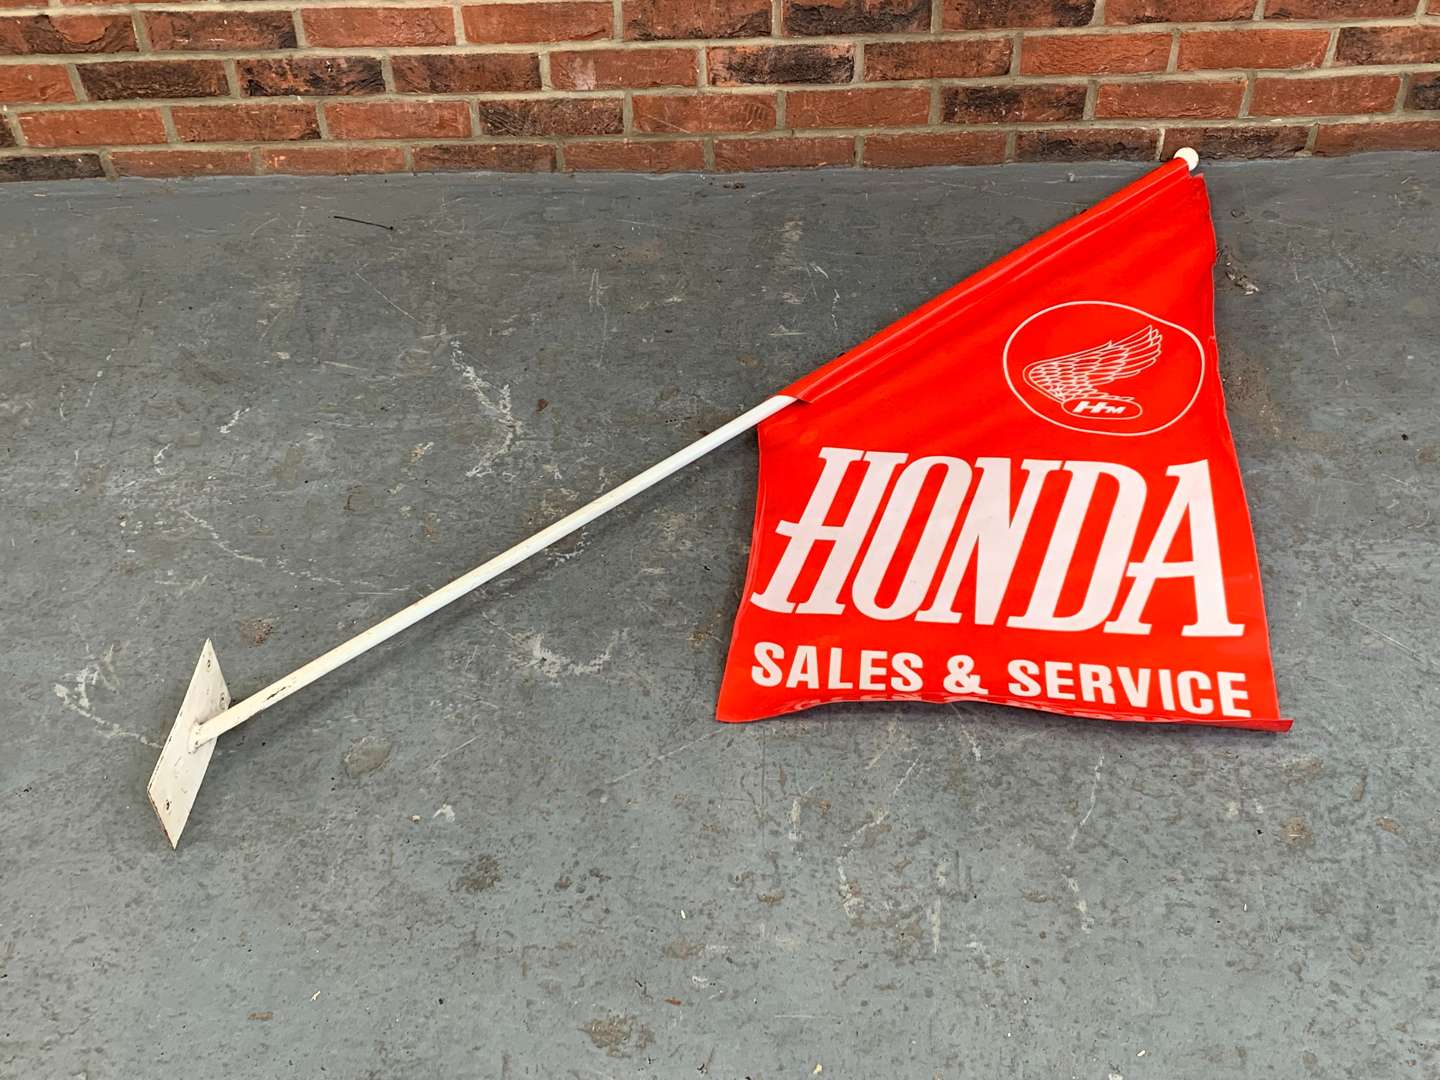 <p>Genuine Honda Dealership Flag and Pole</p>